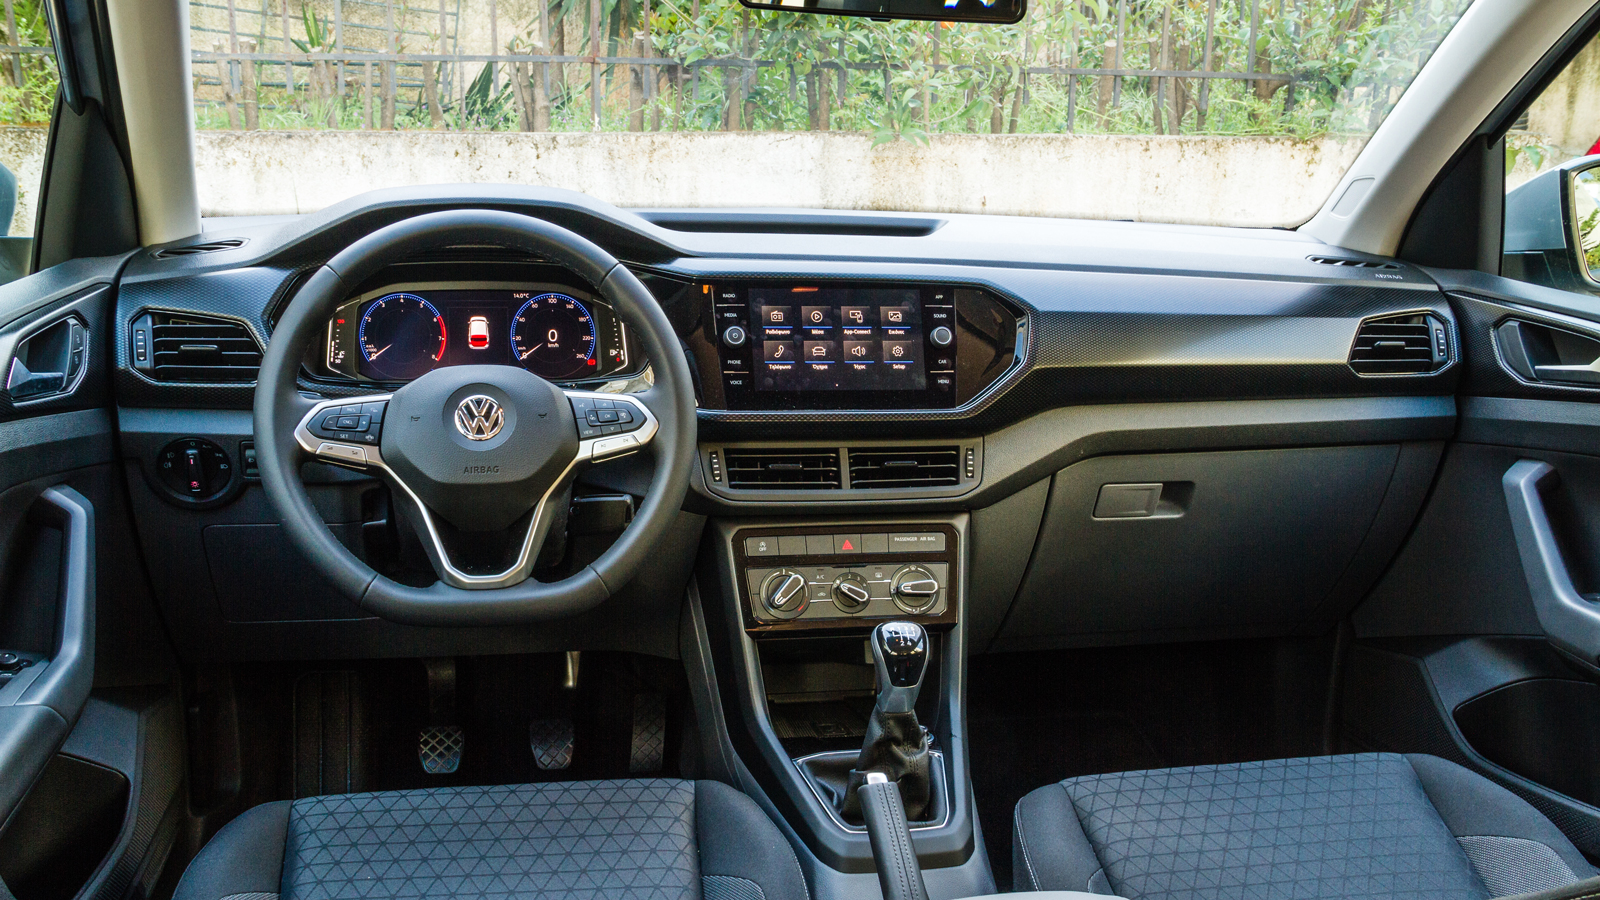 Hyundai Bayon 100ps VS VW T-cross 95ps. Ποιο ξεχωρίζει σε εξοπλισμό ασφαλείας και άνεσης;